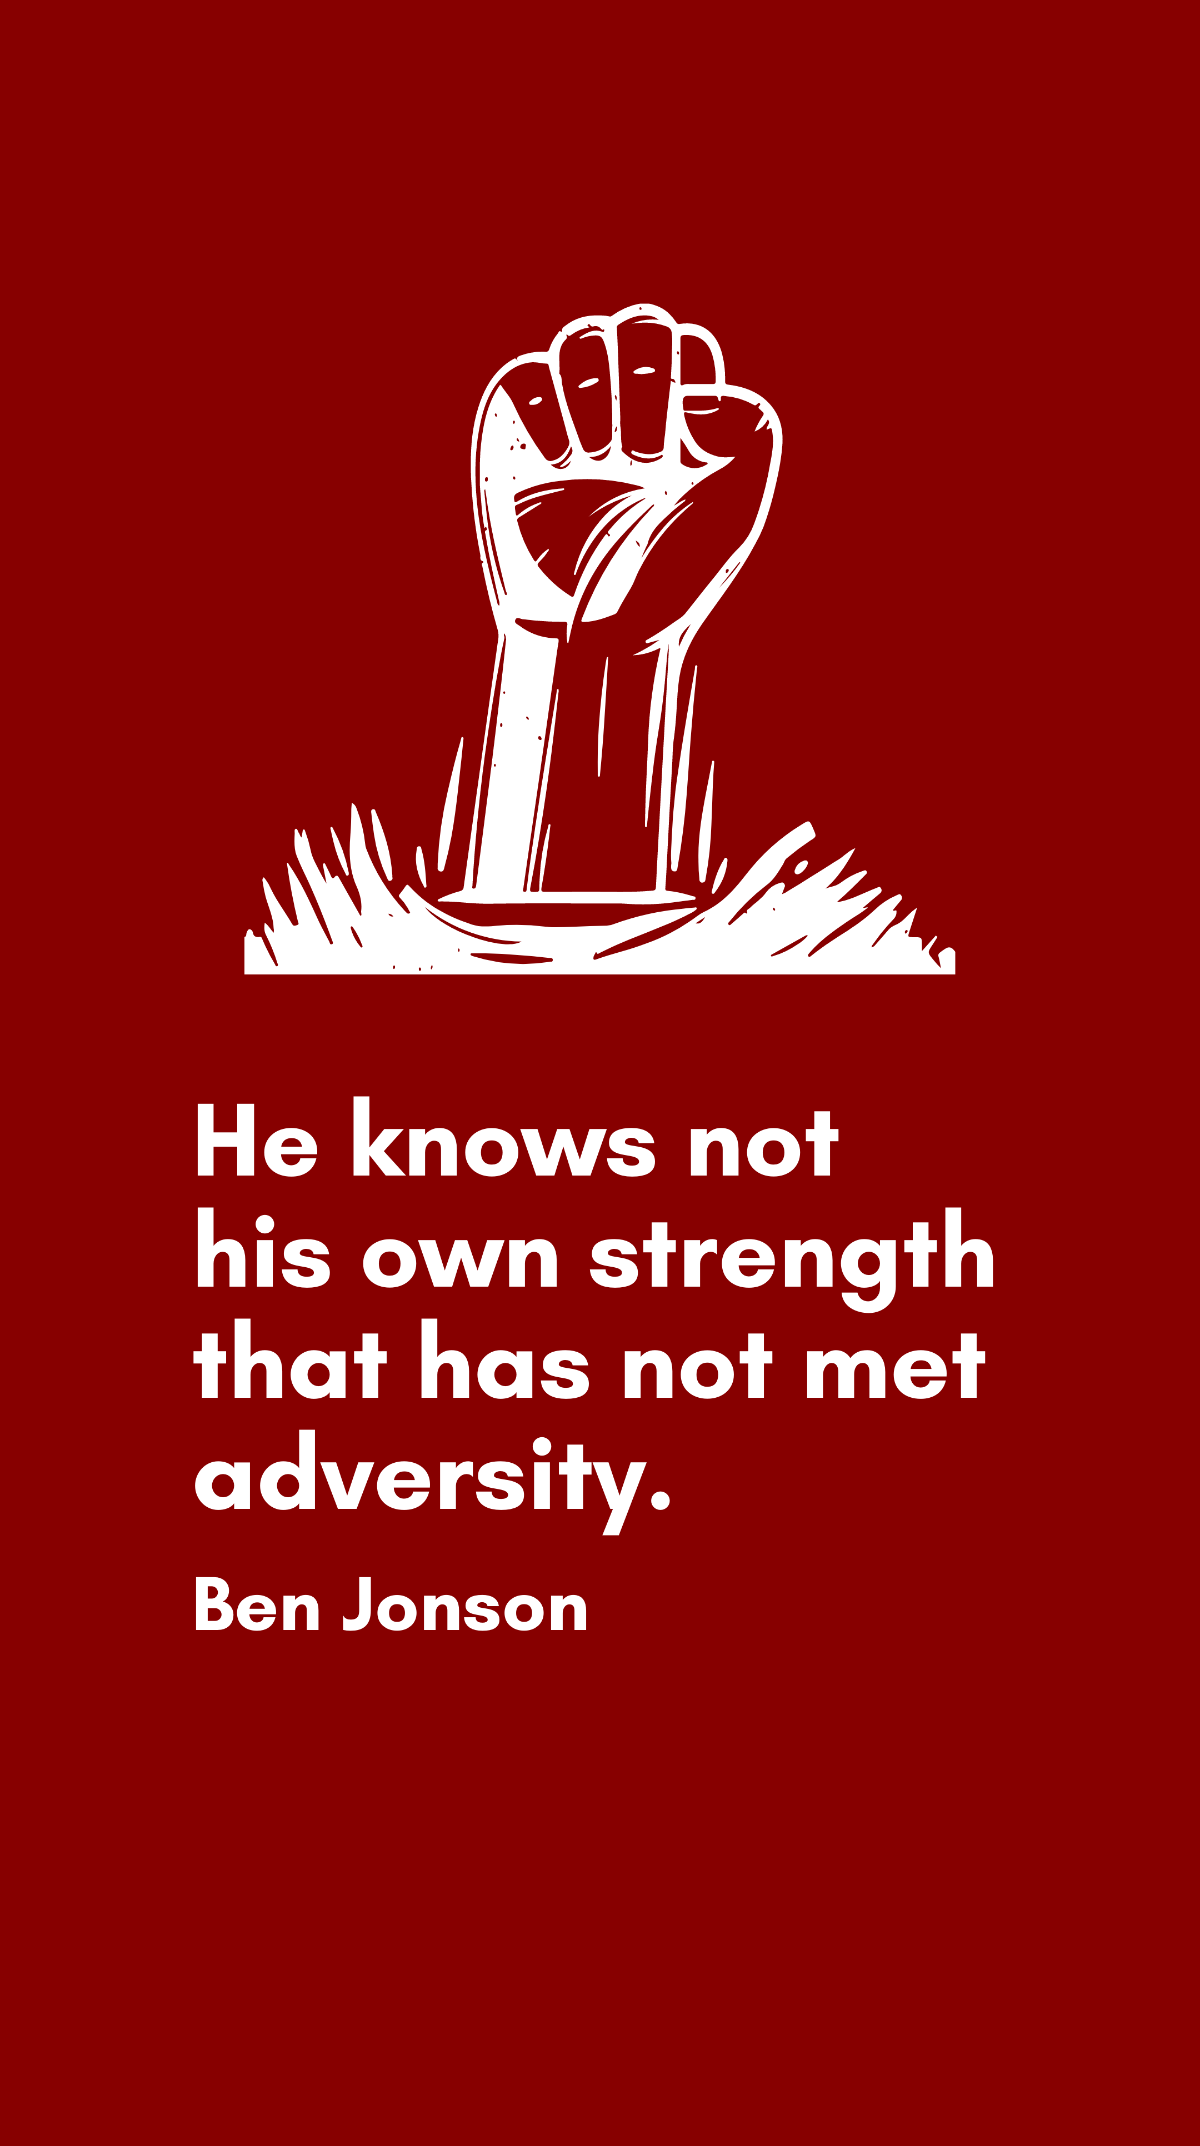 Ben Jonson - He knows not his own strength that has not met adversity. Template